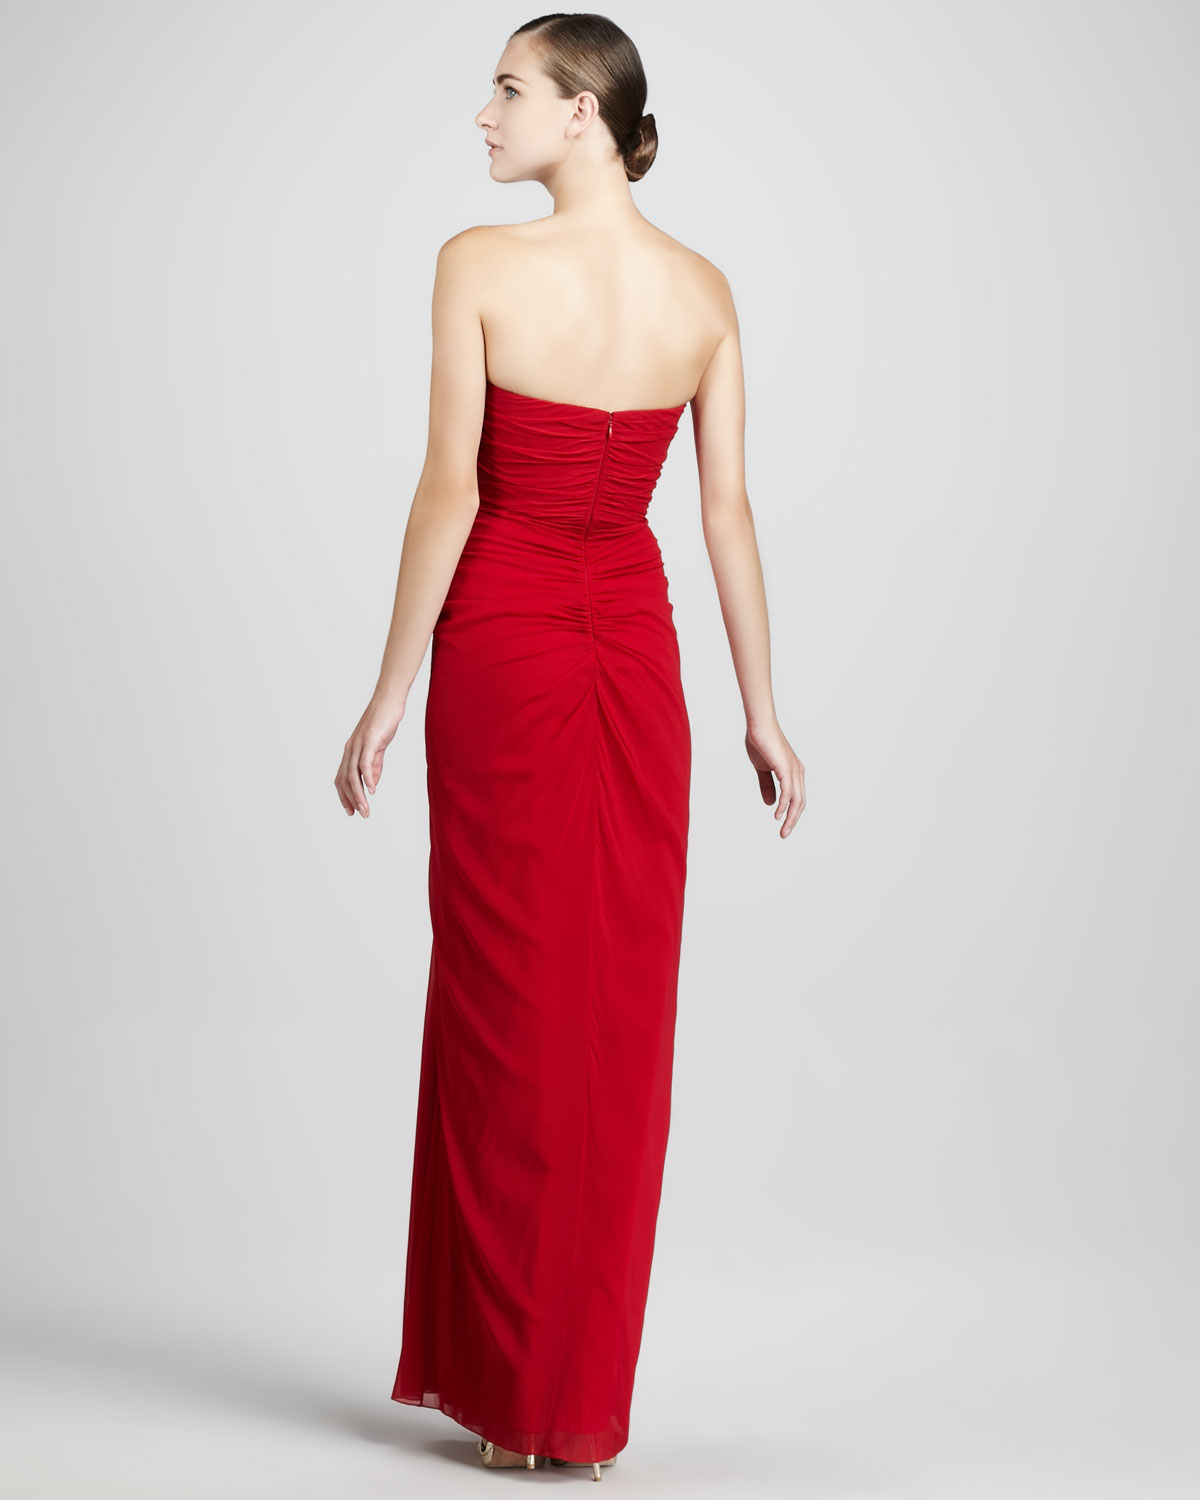 Lyst - Badgley mischka Strapless Ruffled Gown in Red